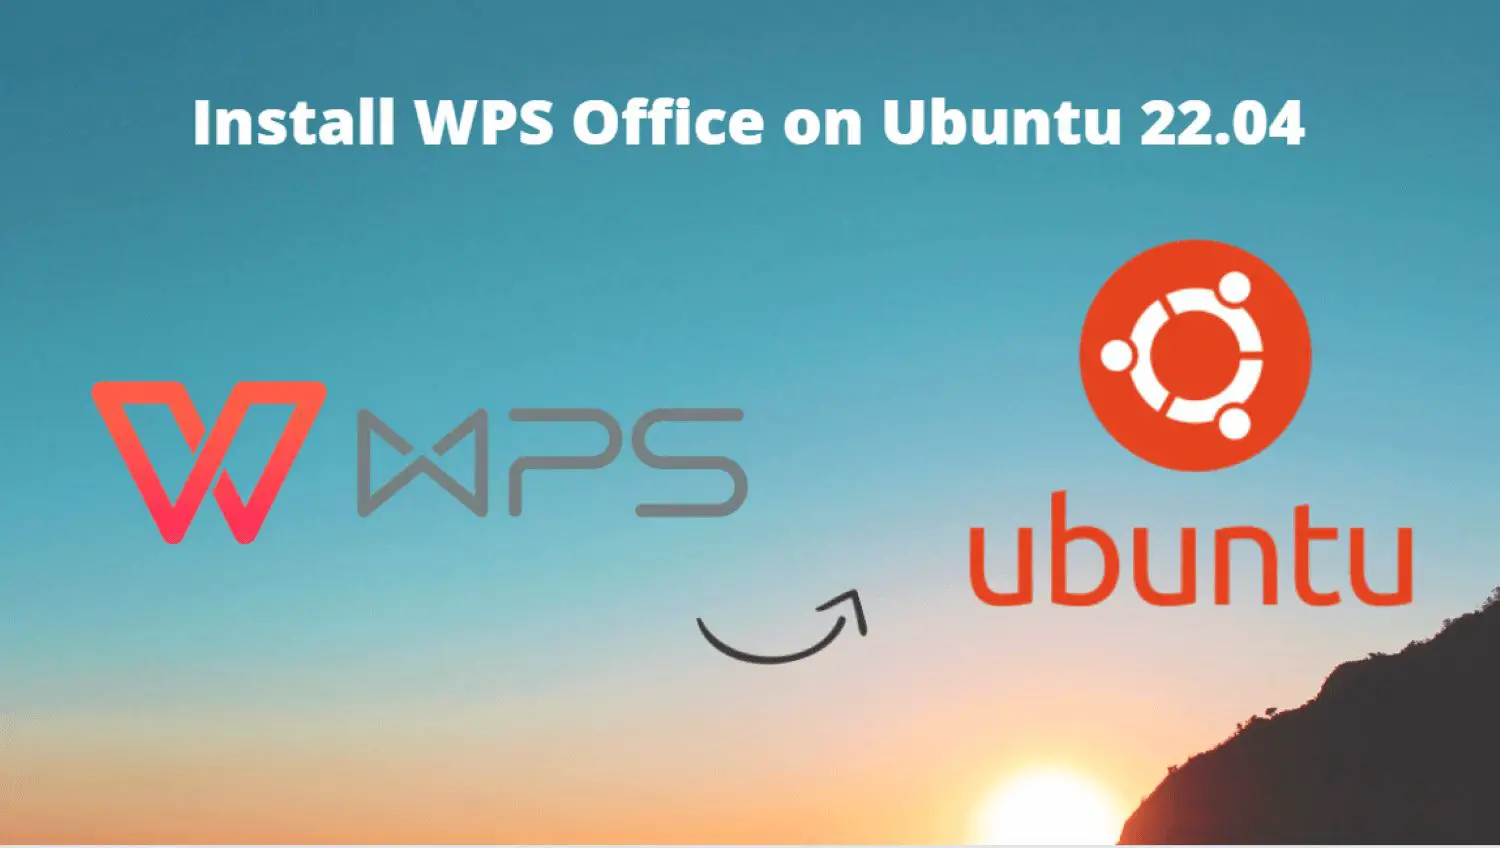 Install WPS Office on Ubuntu 22.04